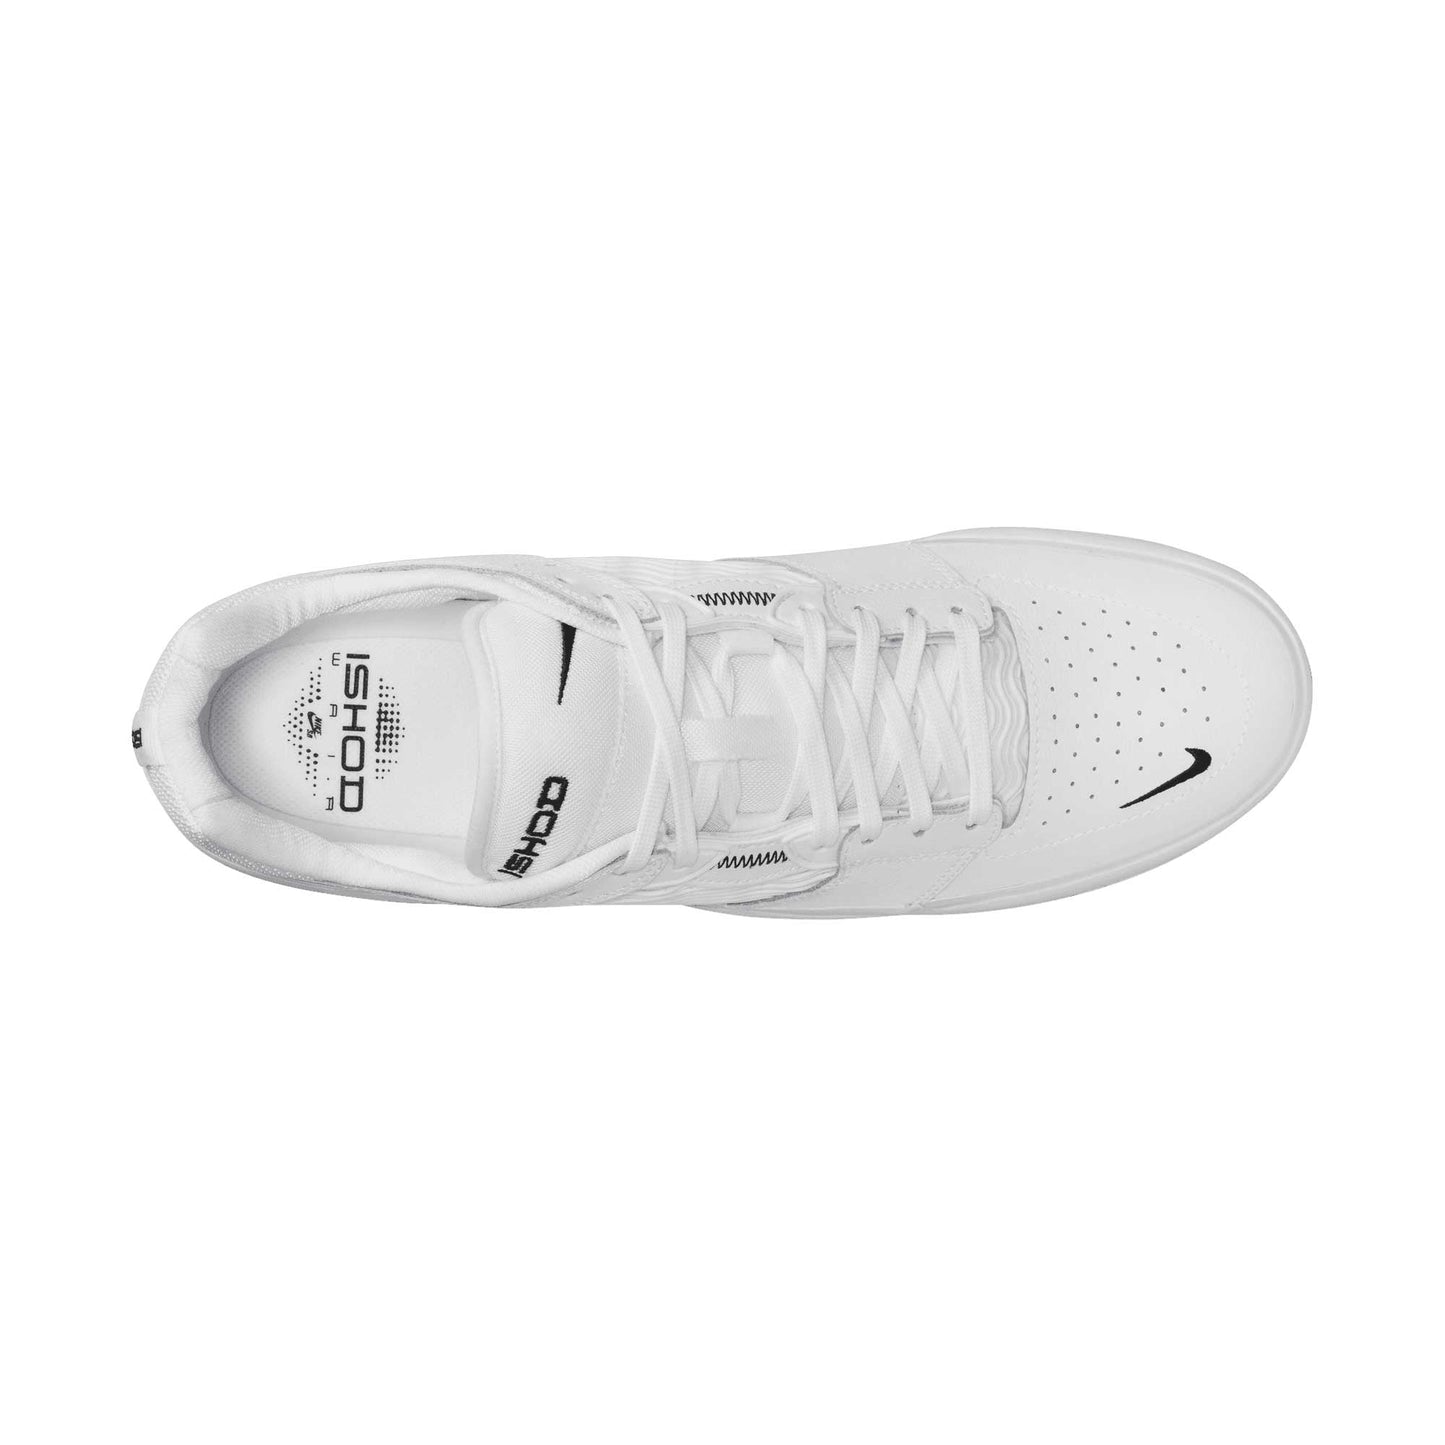 Nike SB Ishod Wair Premium, white/black-white-black - Tiki Room Skateboards - 8